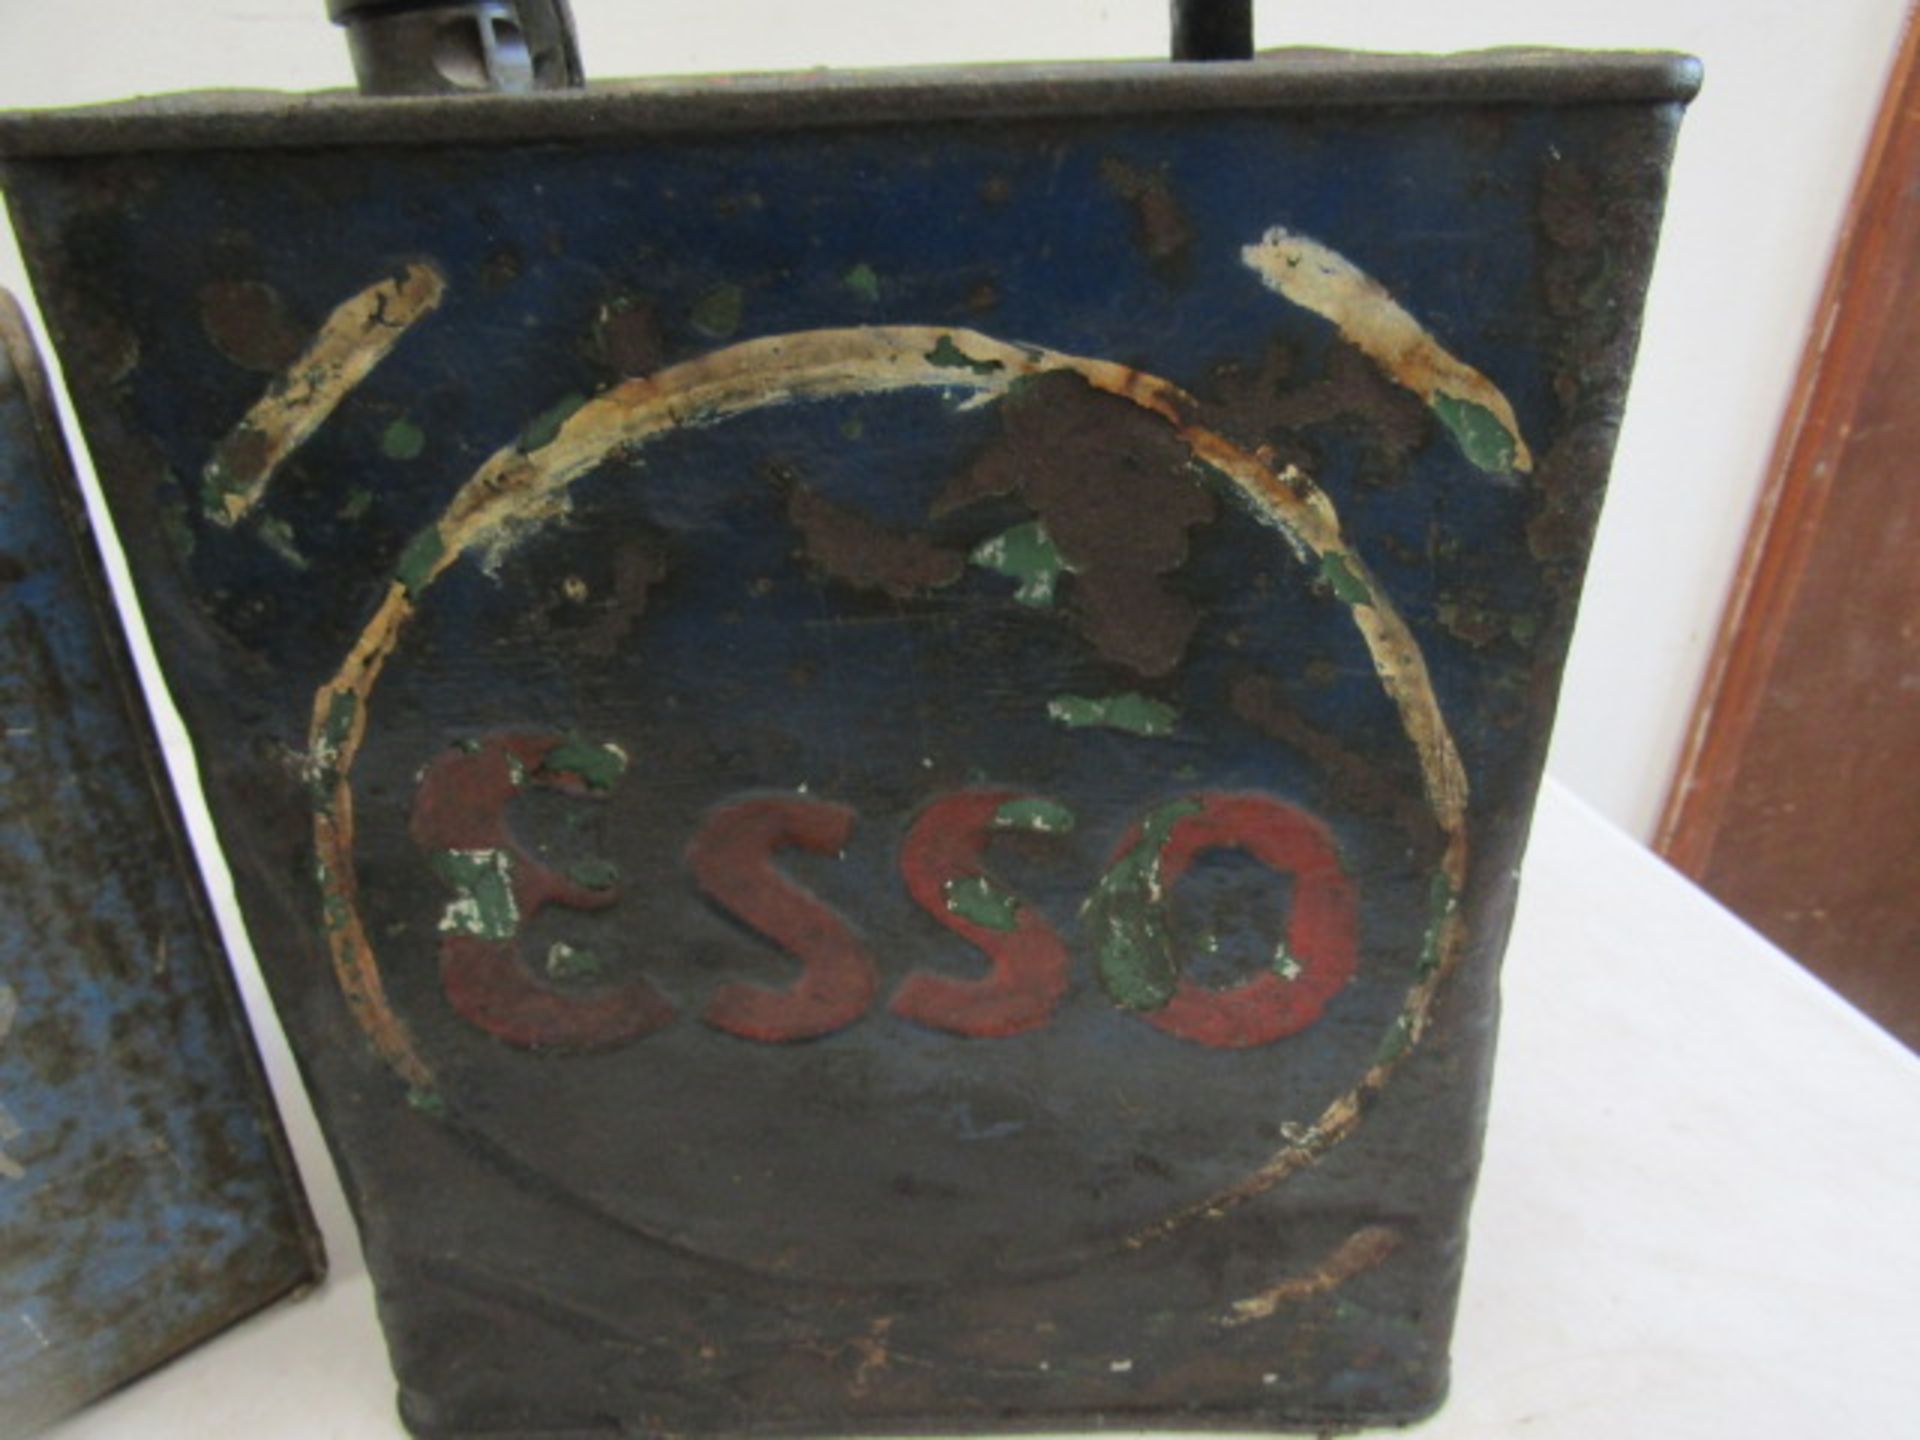 2 Esso vintage petrol cans - Image 3 of 4